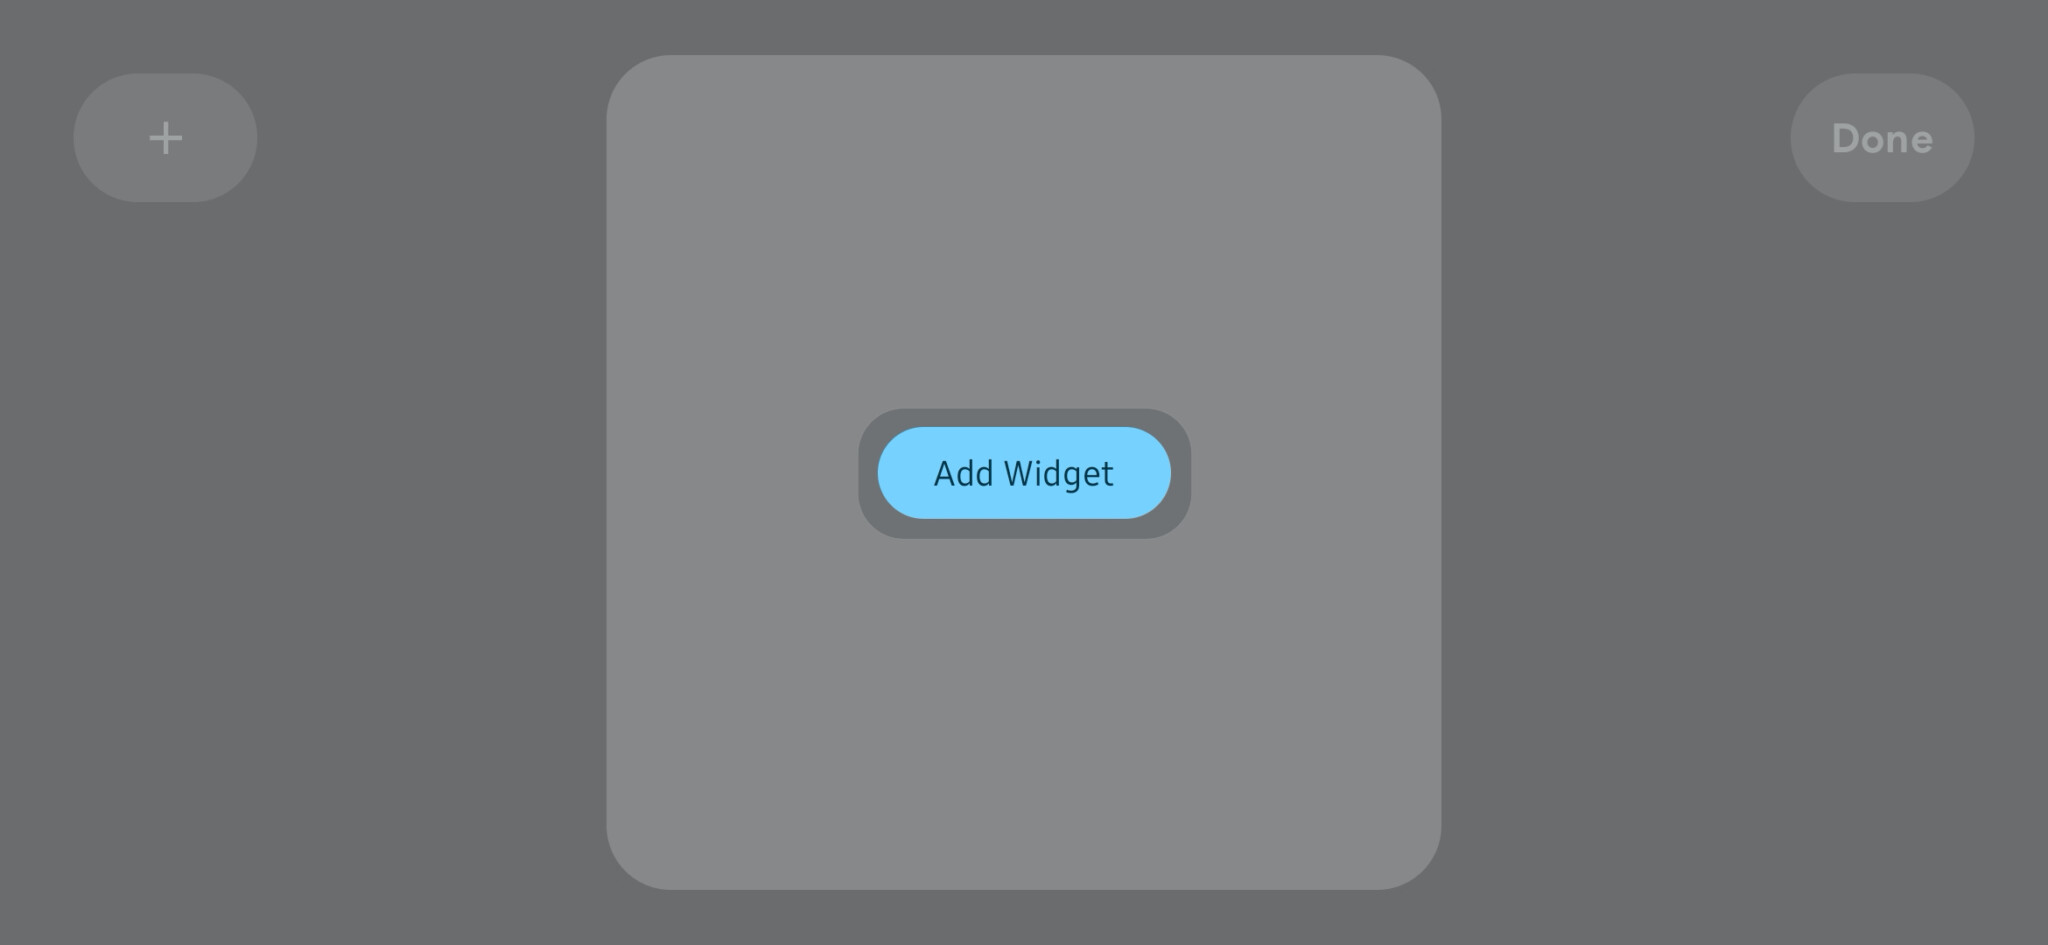 tap-add-widget-on-standby-mode-pro-app-scaled